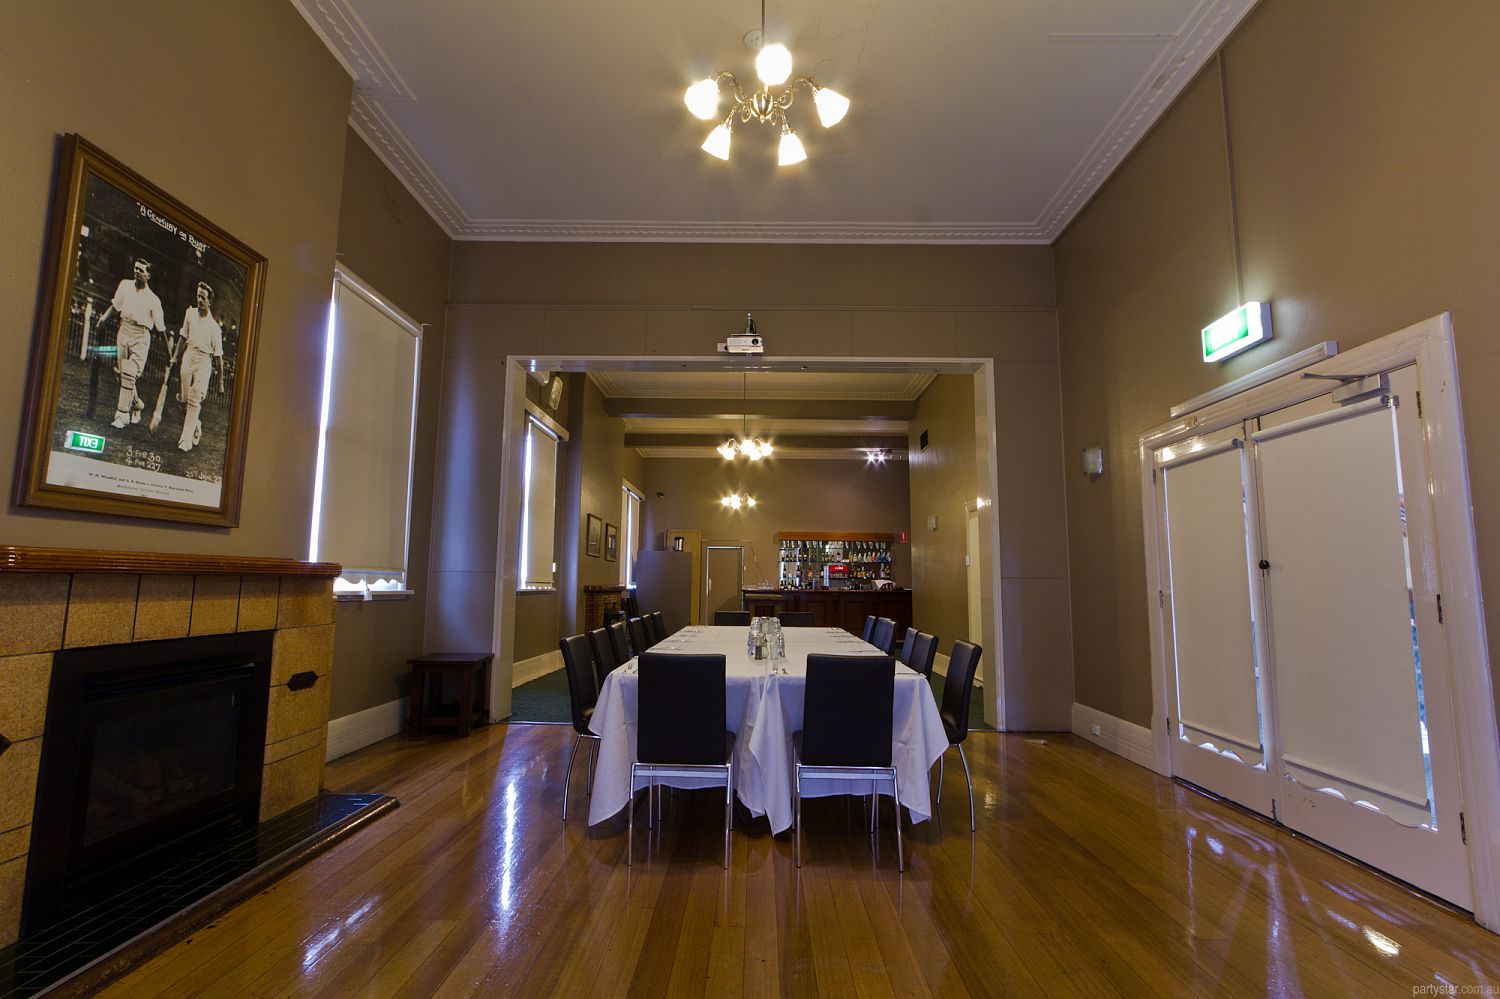 Oscar's Hotel, Ballarat, VIC. Function Room hire photo #1